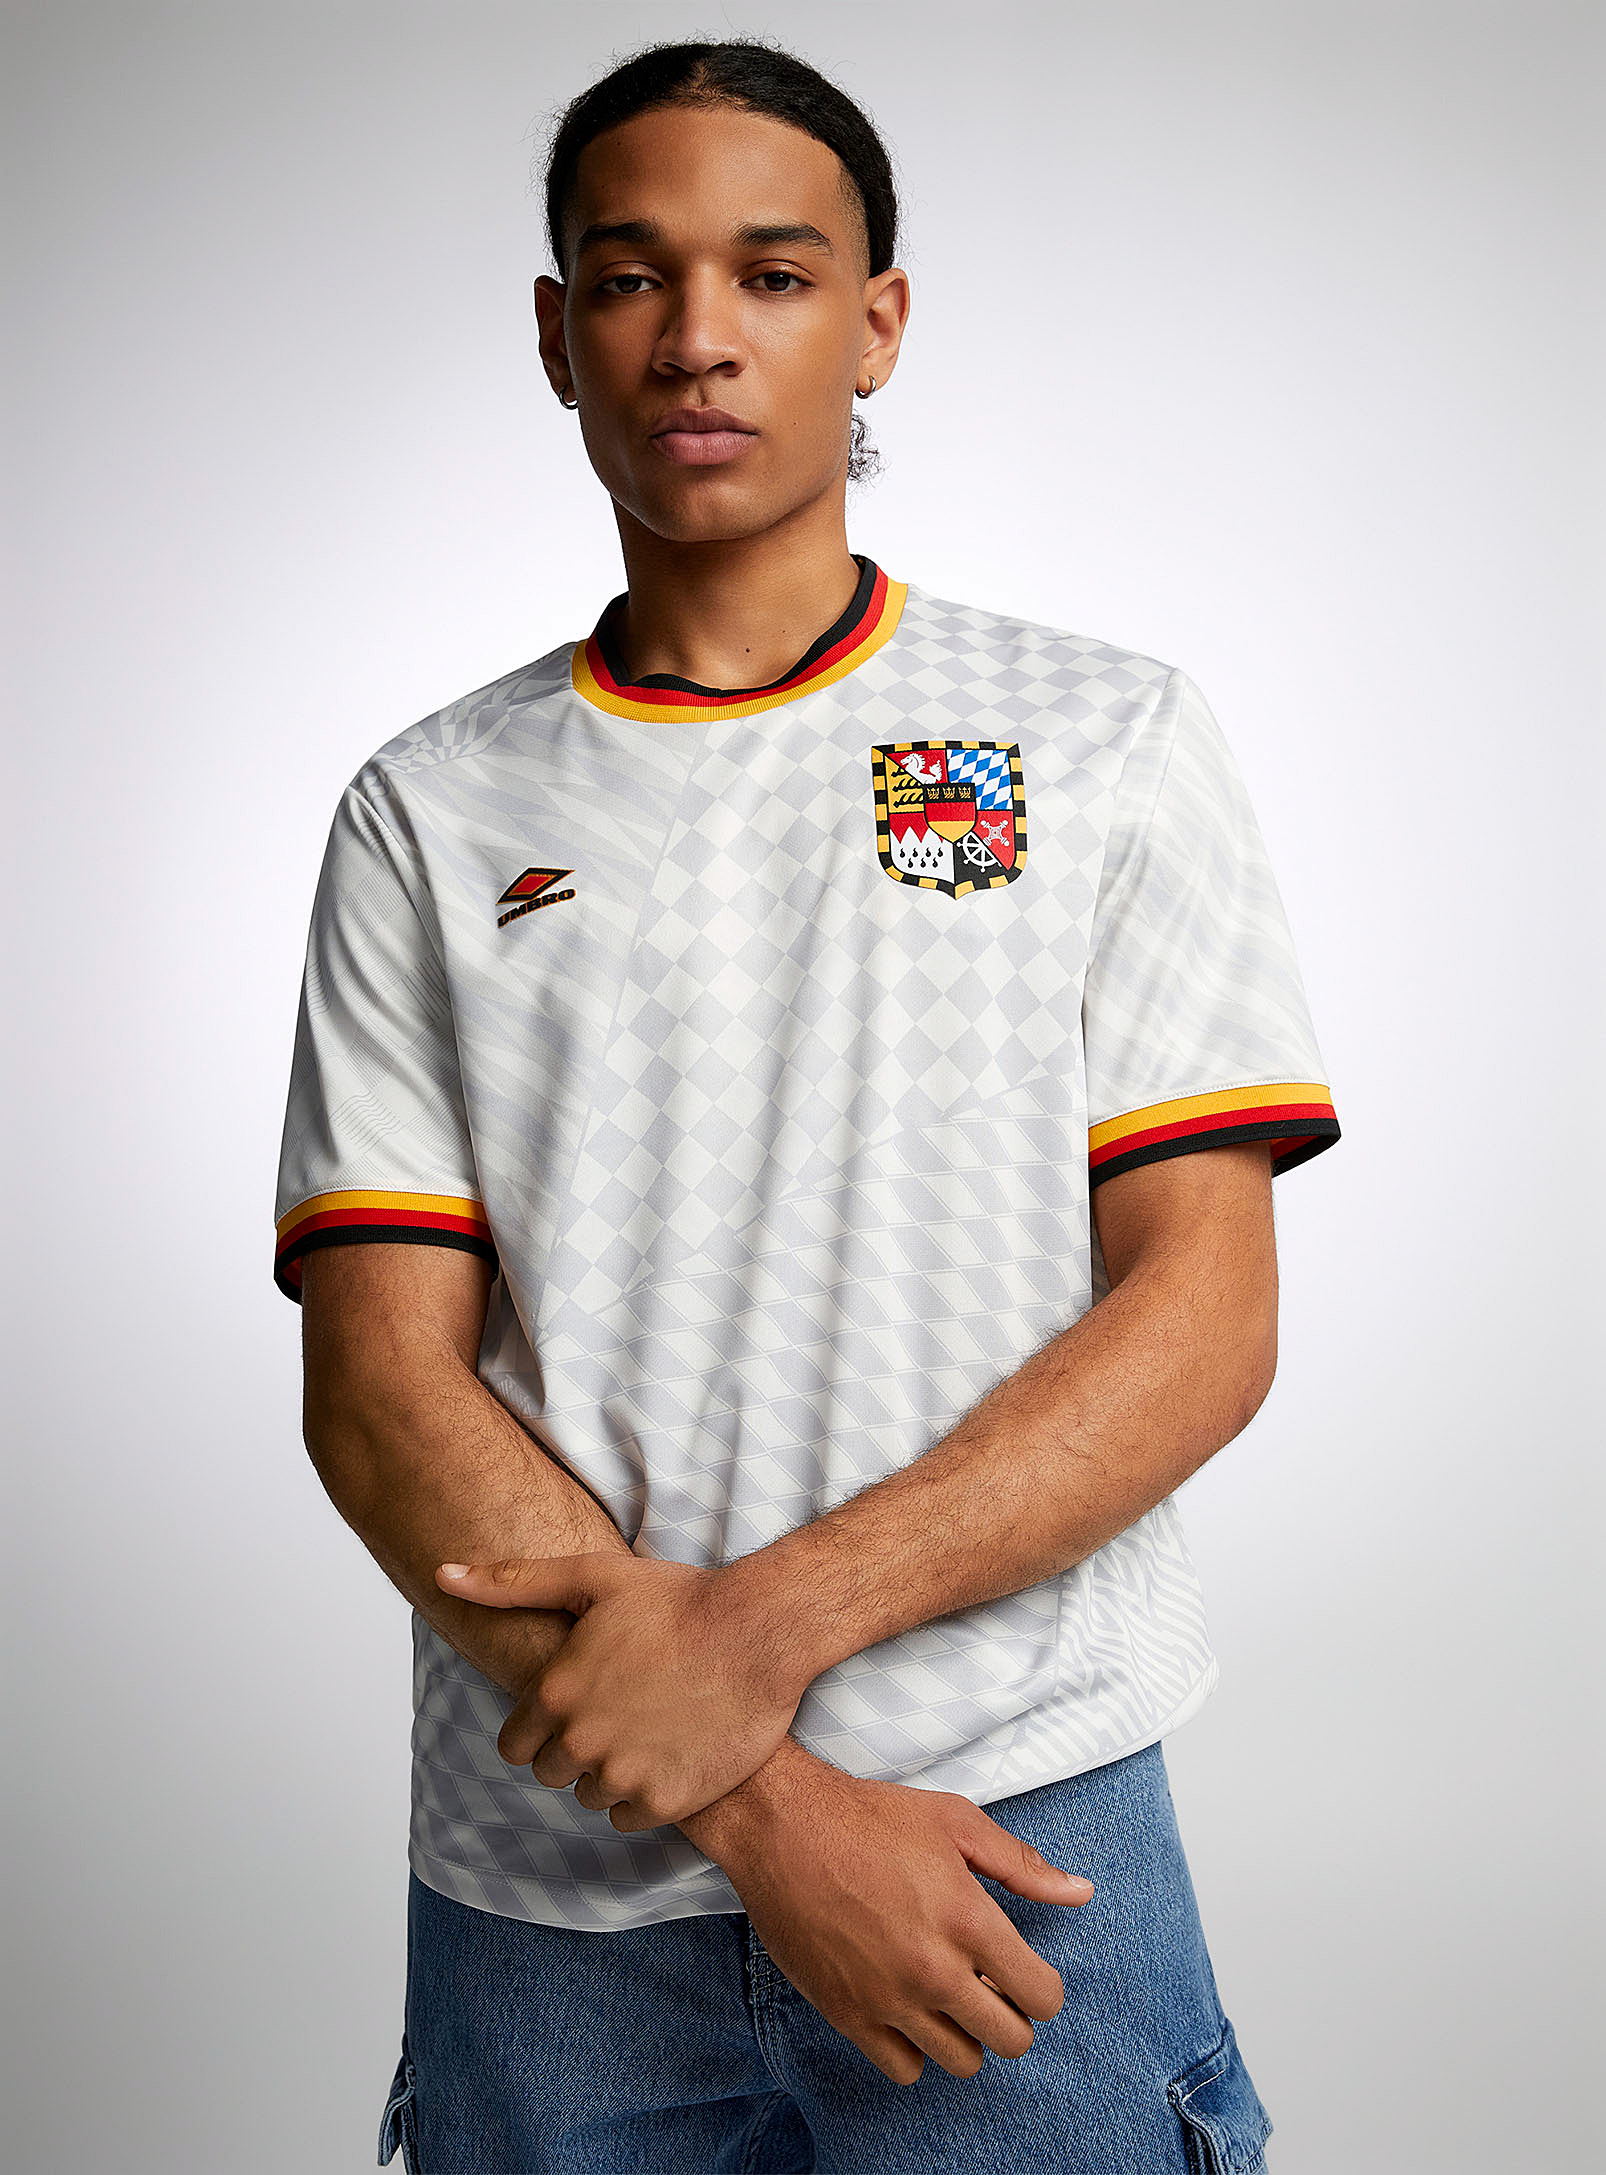 Umbro - Men's Germany soccer jersey